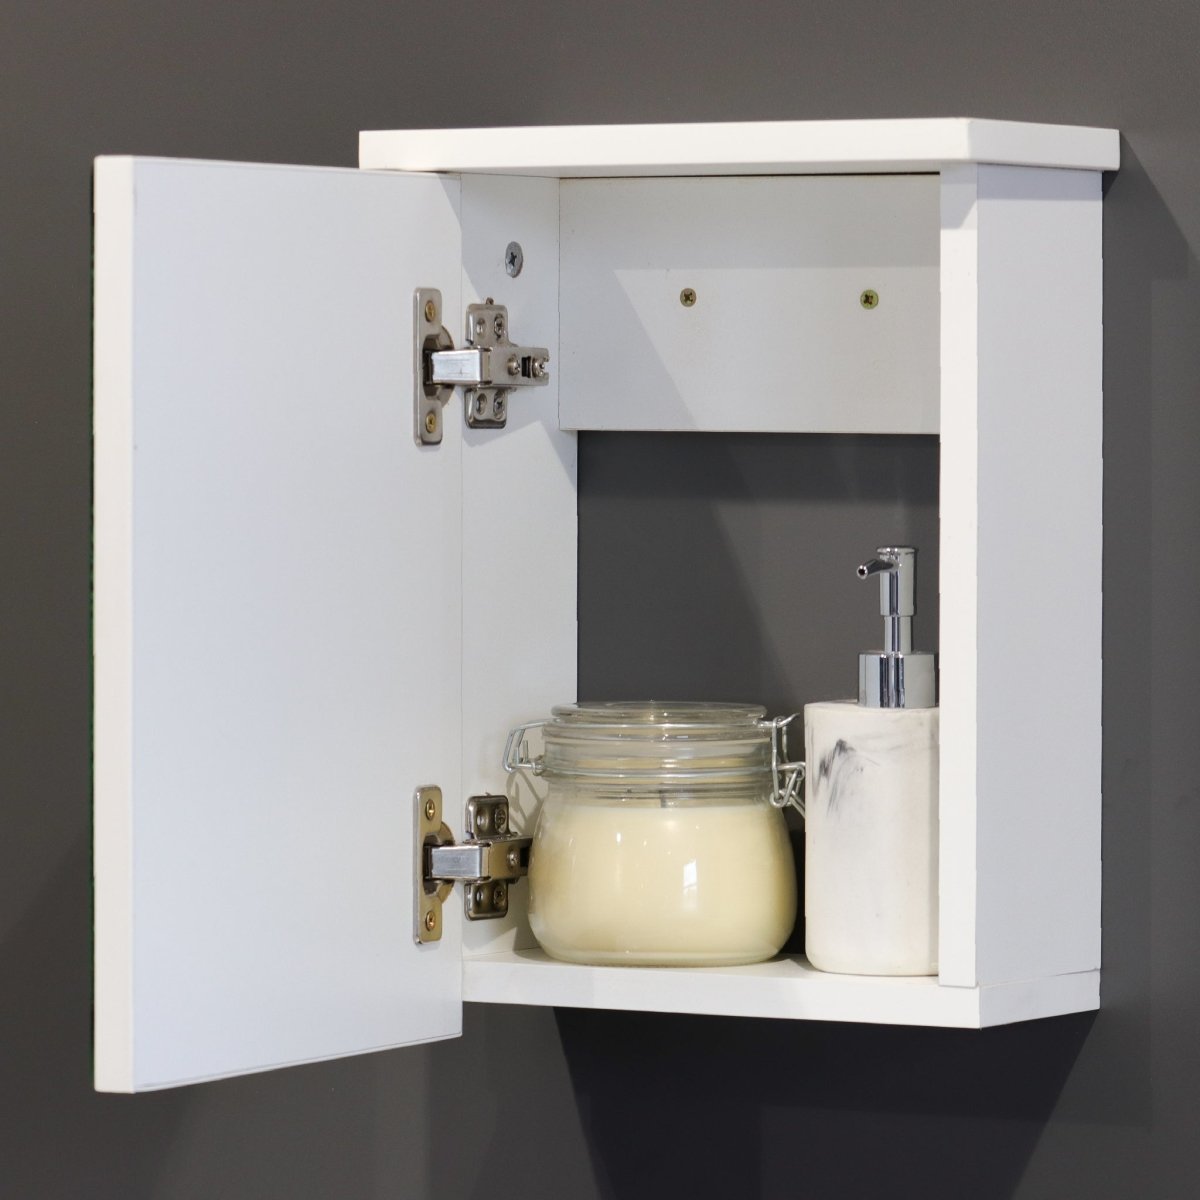 Denver Furniture | Bathroom Mirror Cabinet - Medicine Cabinet | White - Denver Furniture - Pennyware Distributors